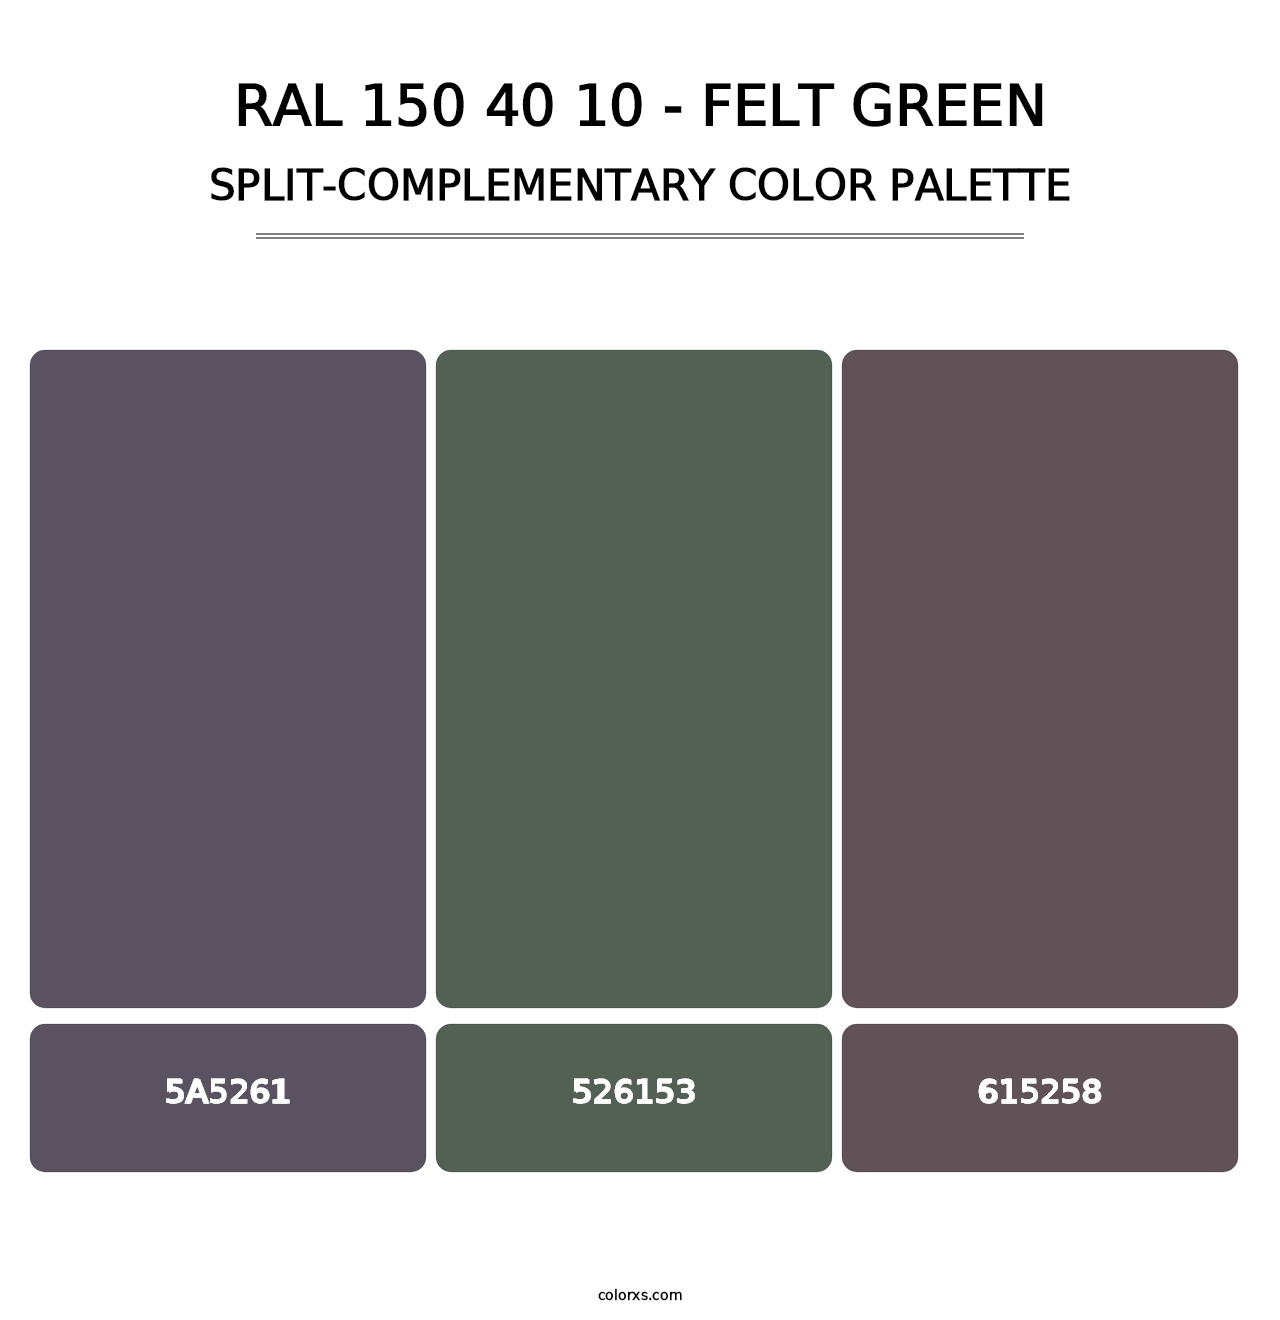 RAL 150 40 10 - Felt Green - Split-Complementary Color Palette